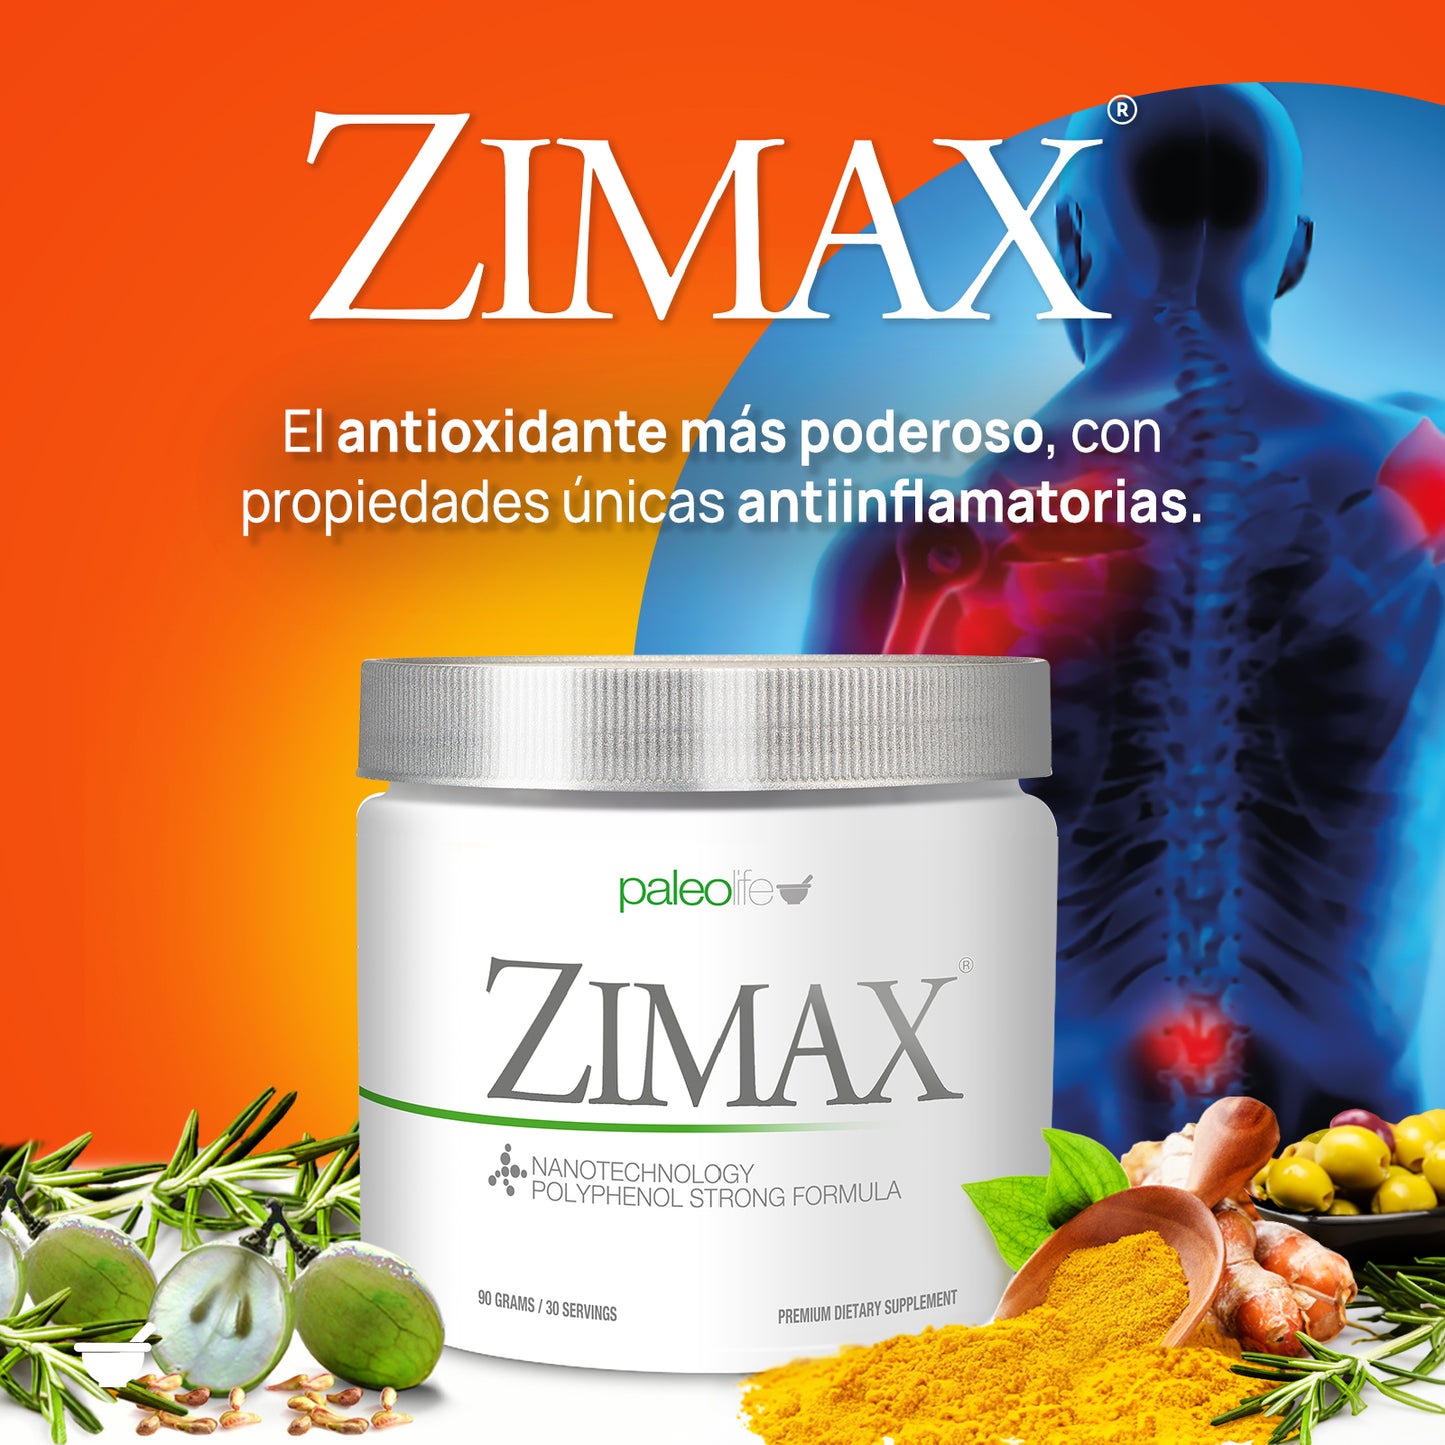 Kit Zimax® en Envase